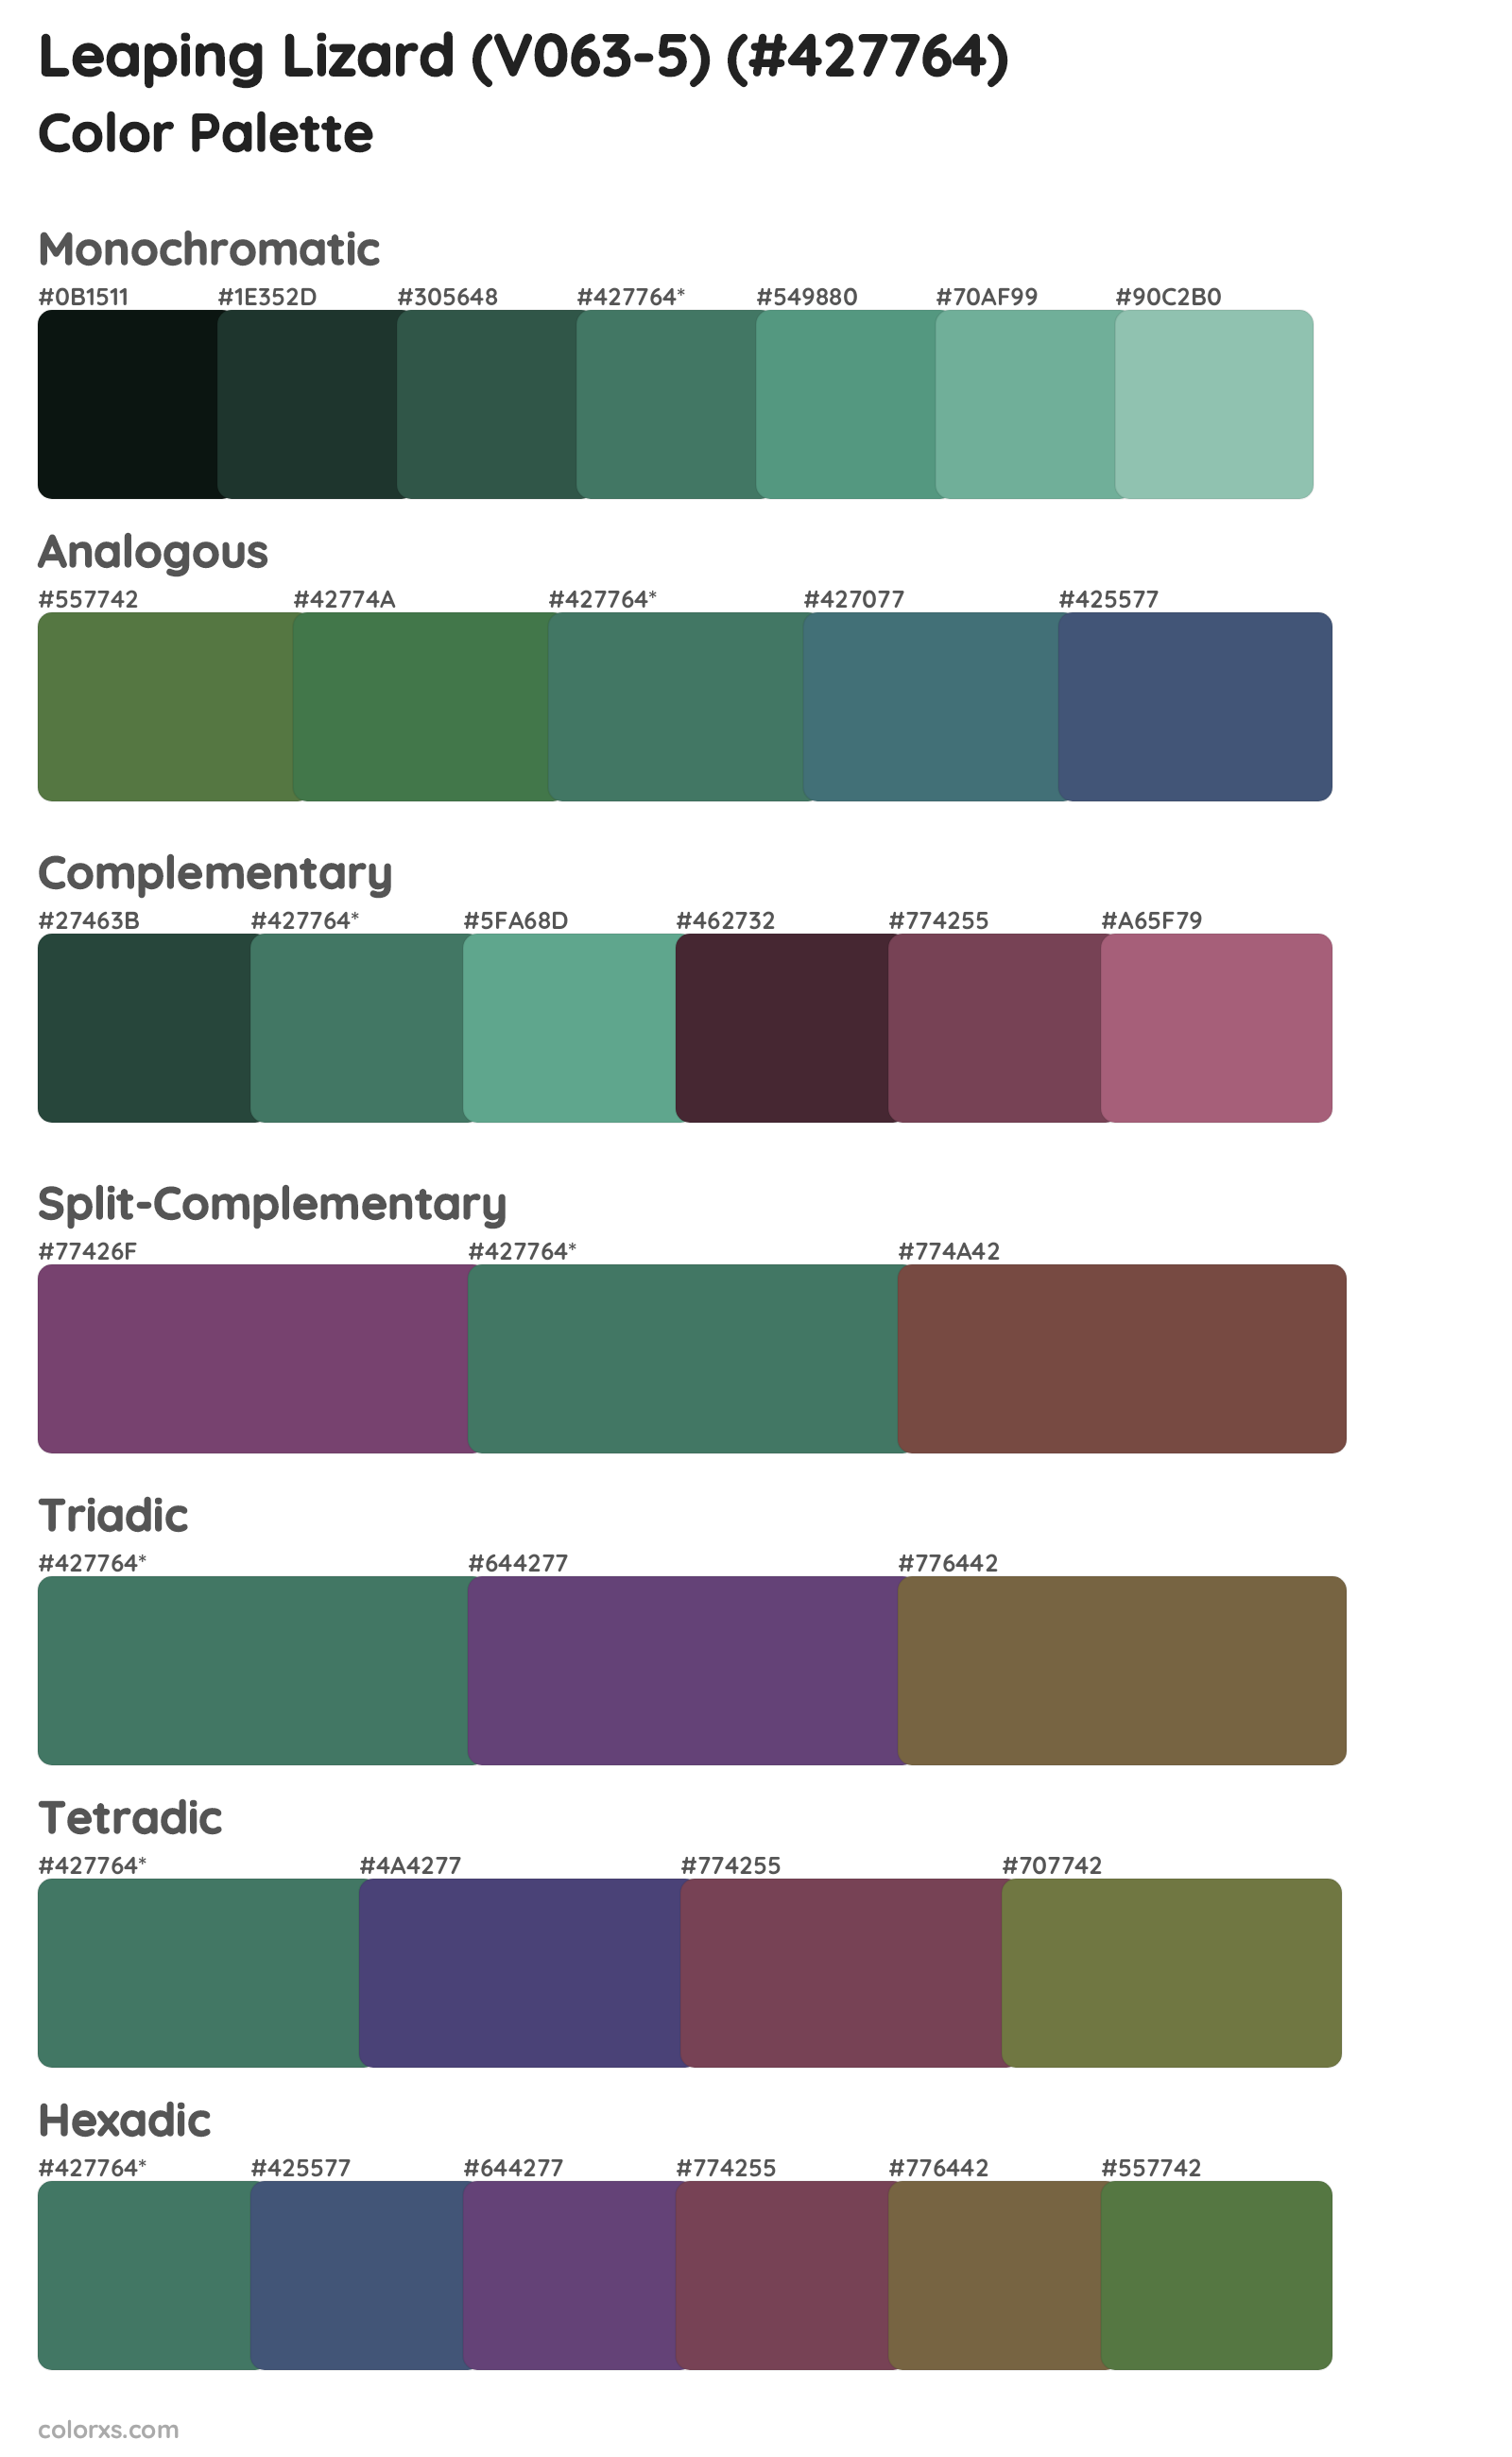 Leaping Lizard (V063-5) Color Scheme Palettes